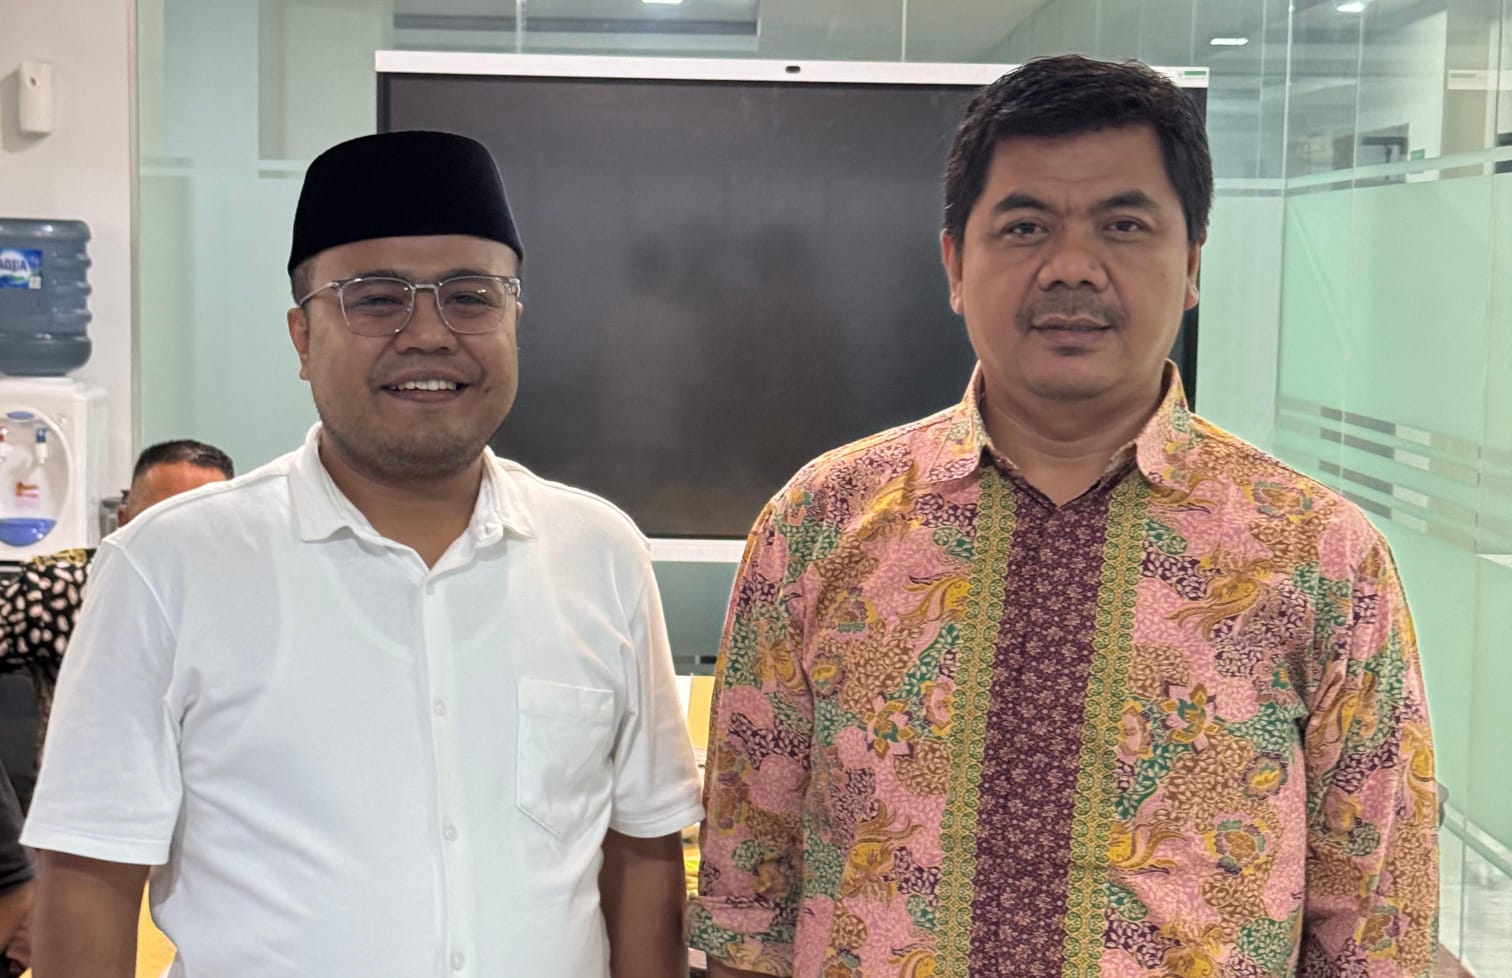 Mantan Ketua Pimpinan Pusat GP Ansor, Juri Ardiantoro dan Cabup Bogor Fuad Kasyfurrahman/Istimewa/